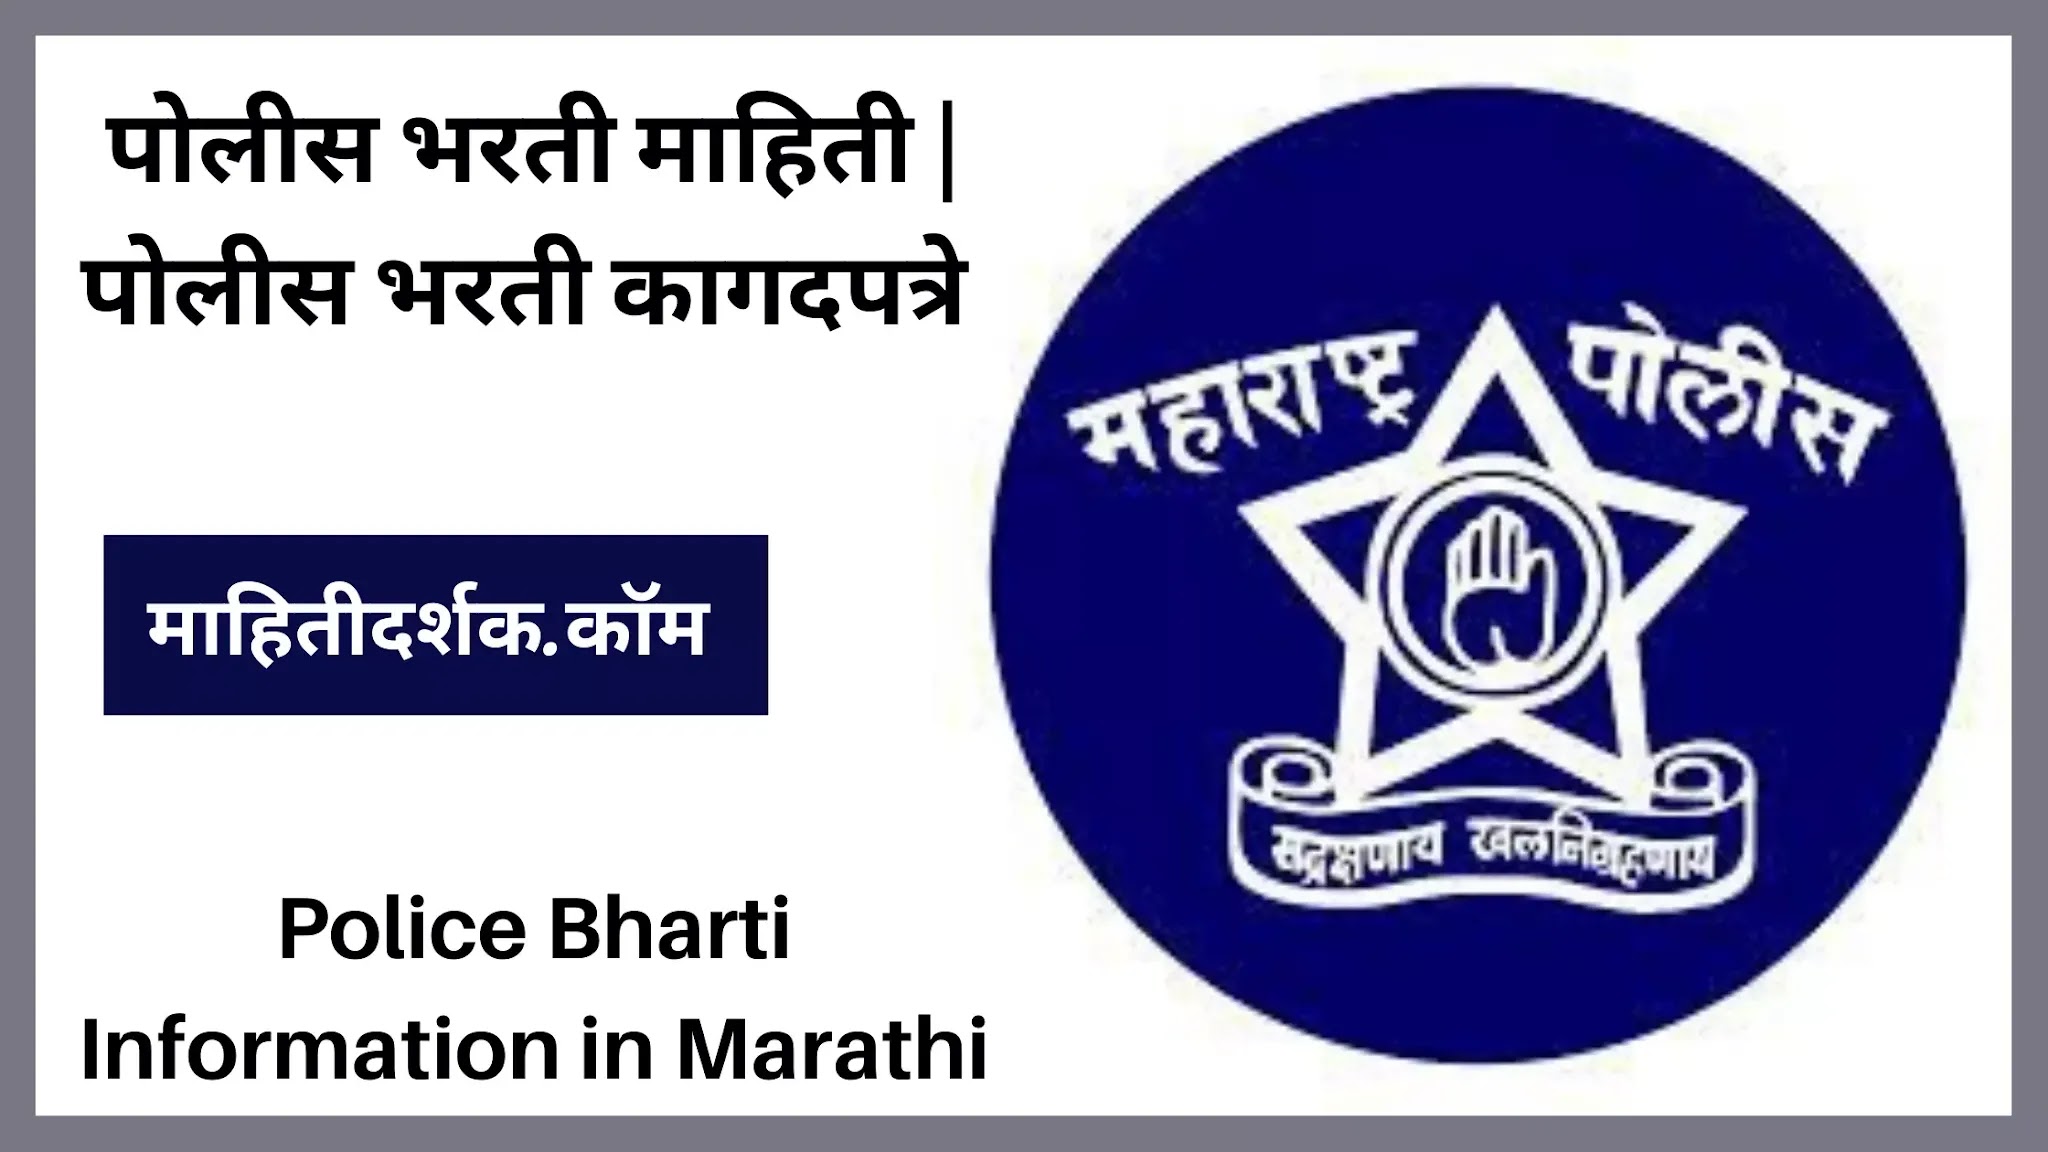 Police bharti document